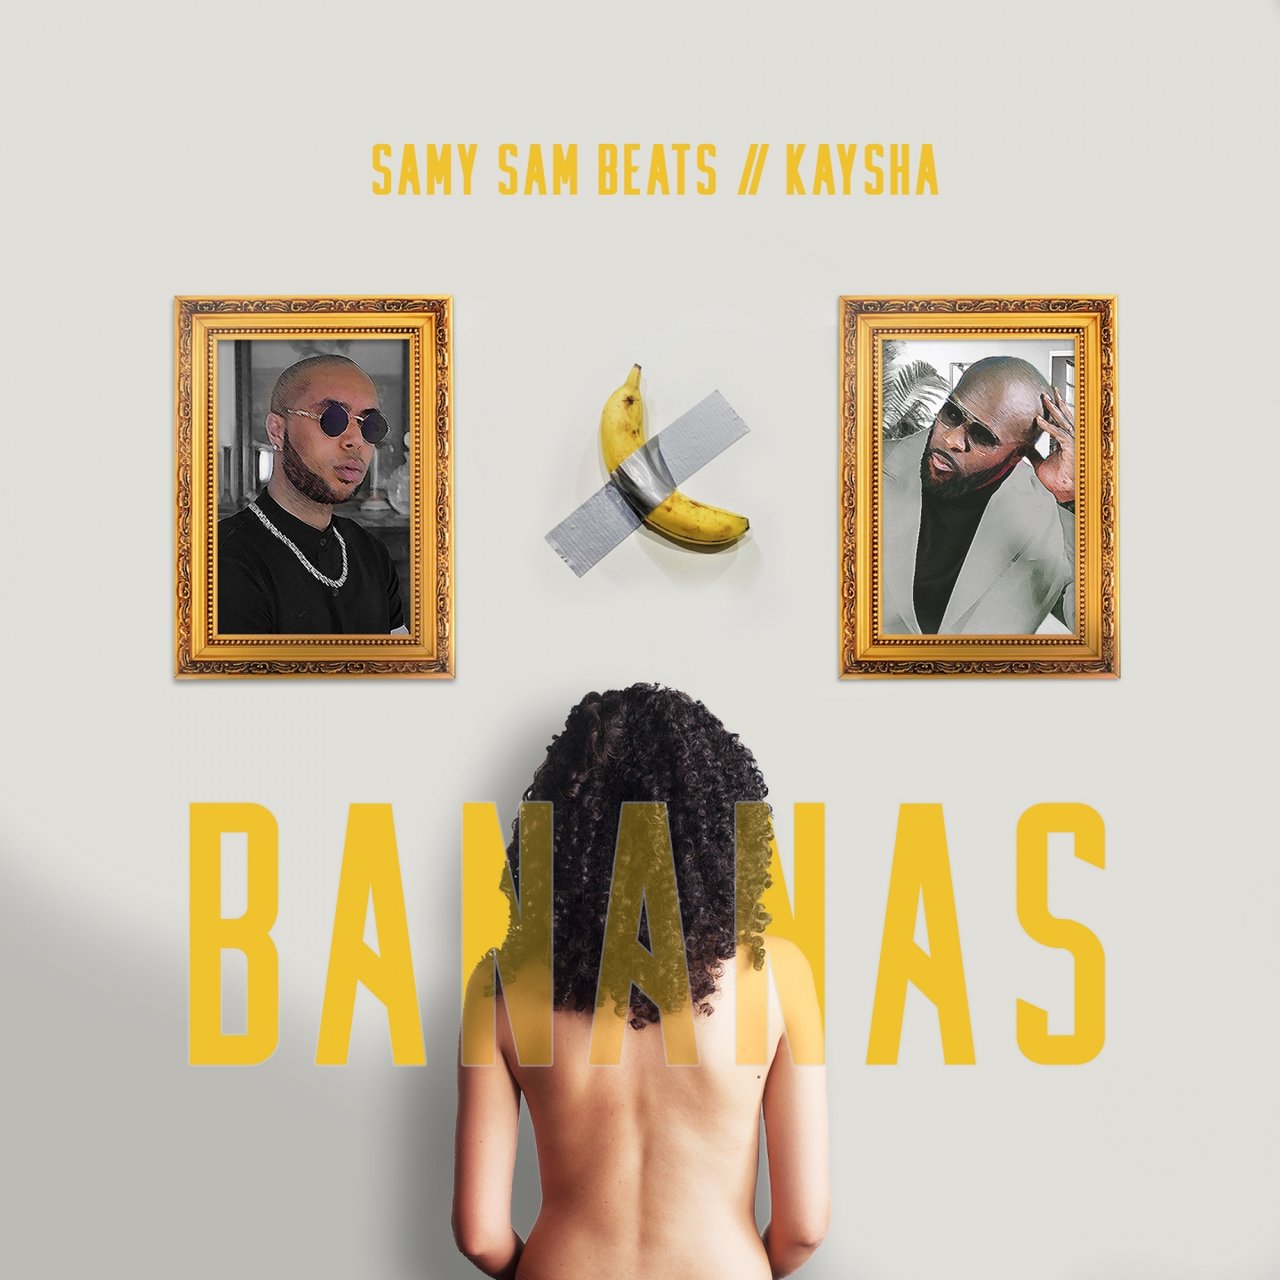 SamySam Beats - Bananas (ft. Kaysha) (Cover)